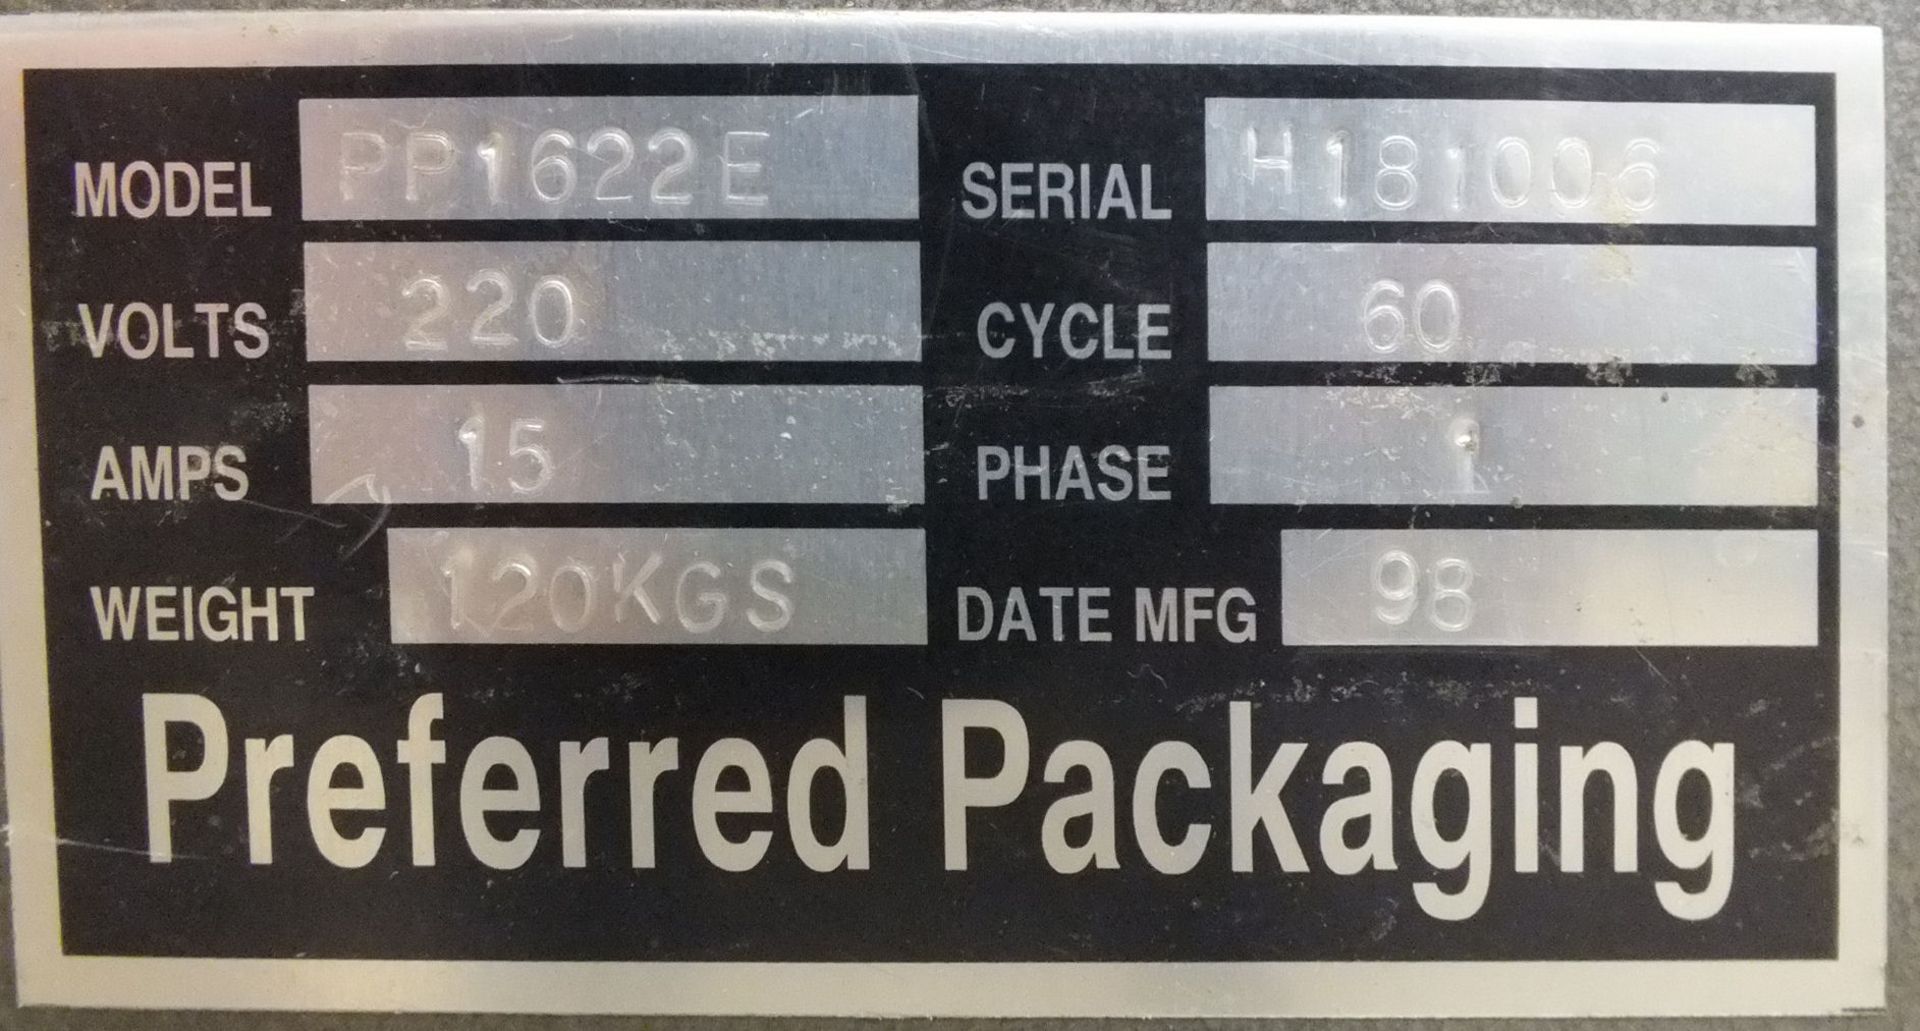 Preferred Packaging PP1622 E Manual L-Bar Sealer B1555 - Image 8 of 8